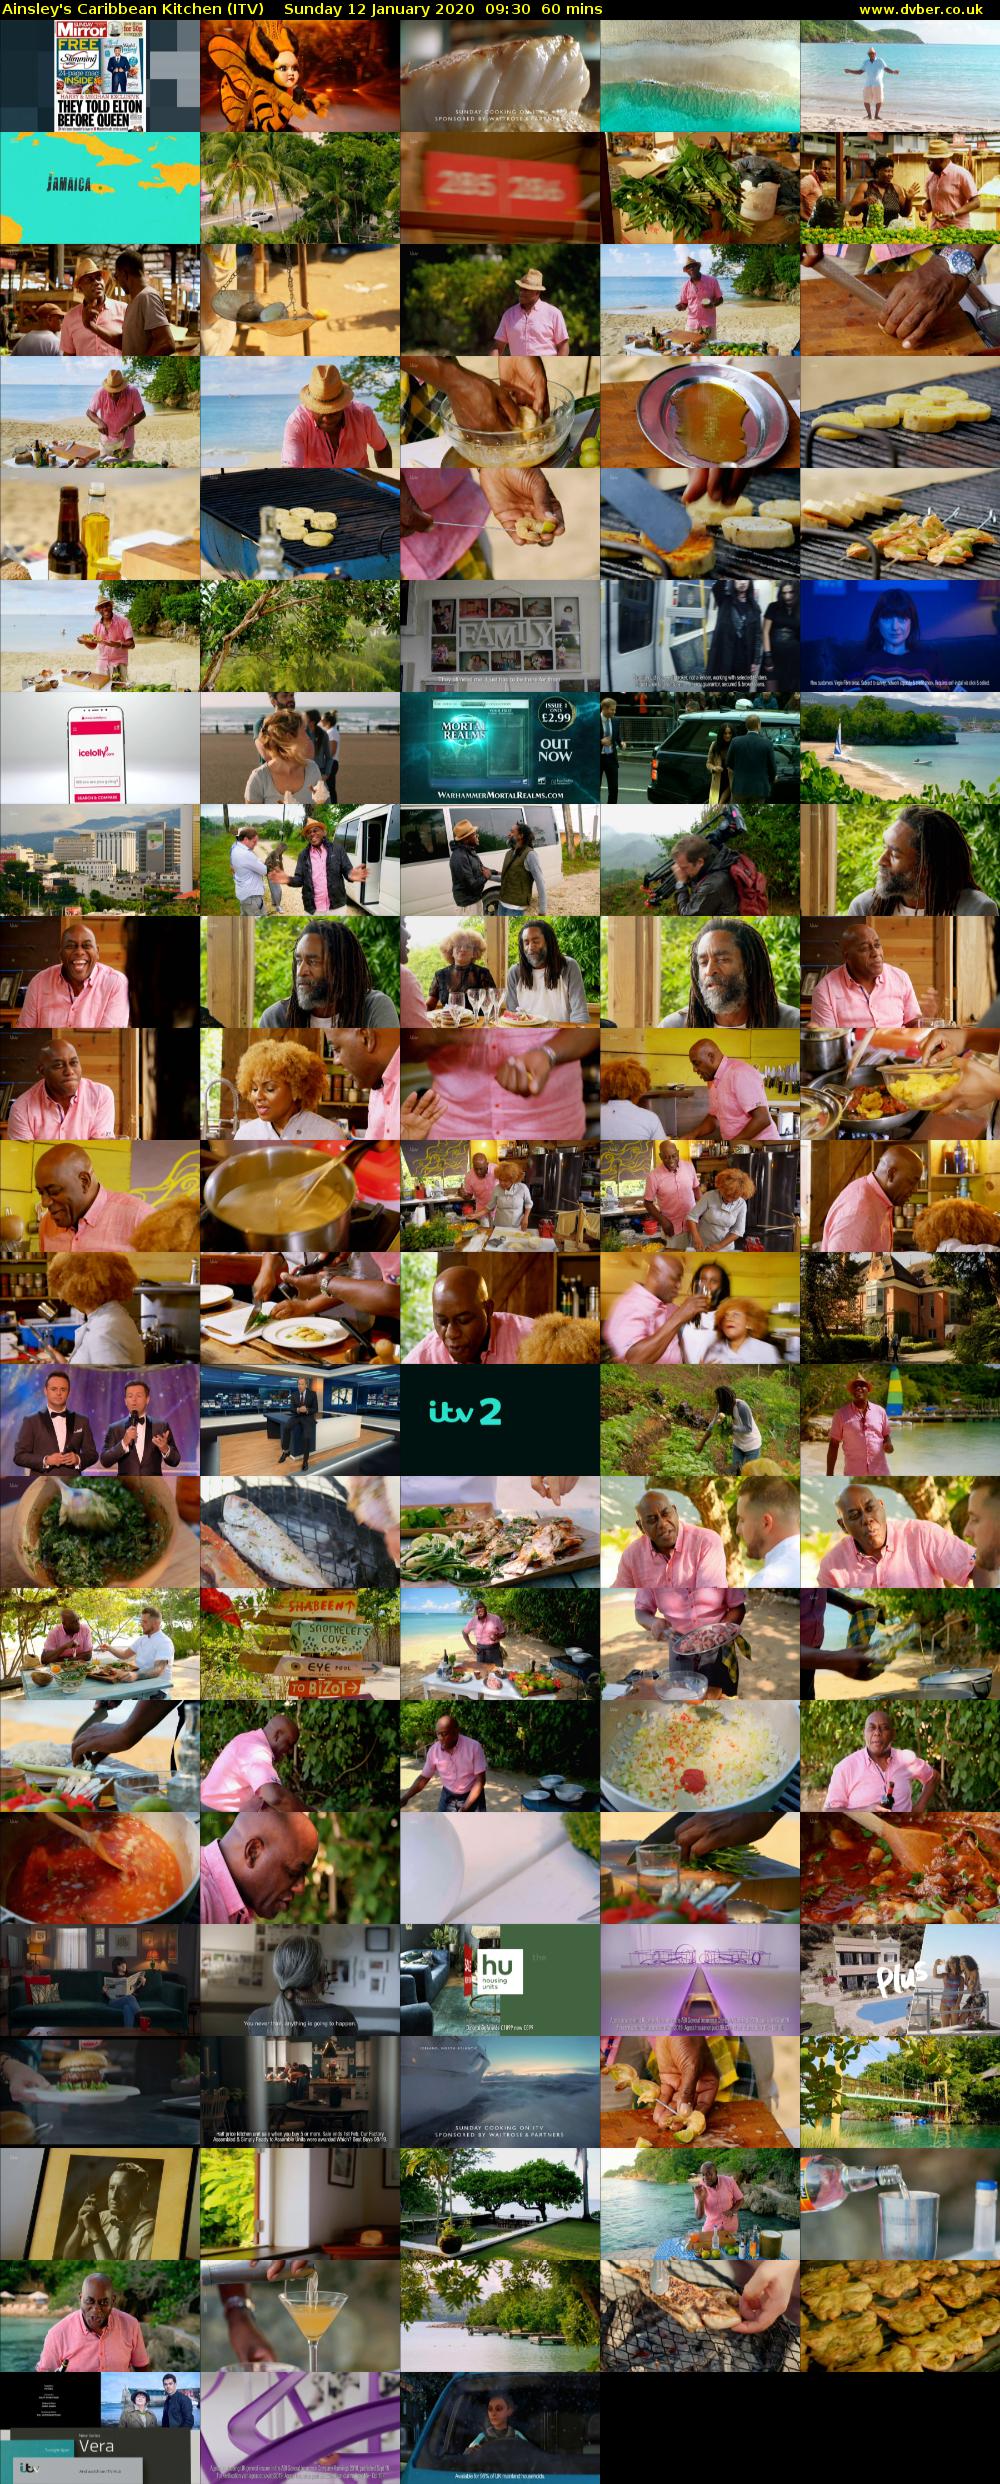 Ainsley's Caribbean Kitchen (ITV) Sunday 12 January 2020 09:30 - 10:30